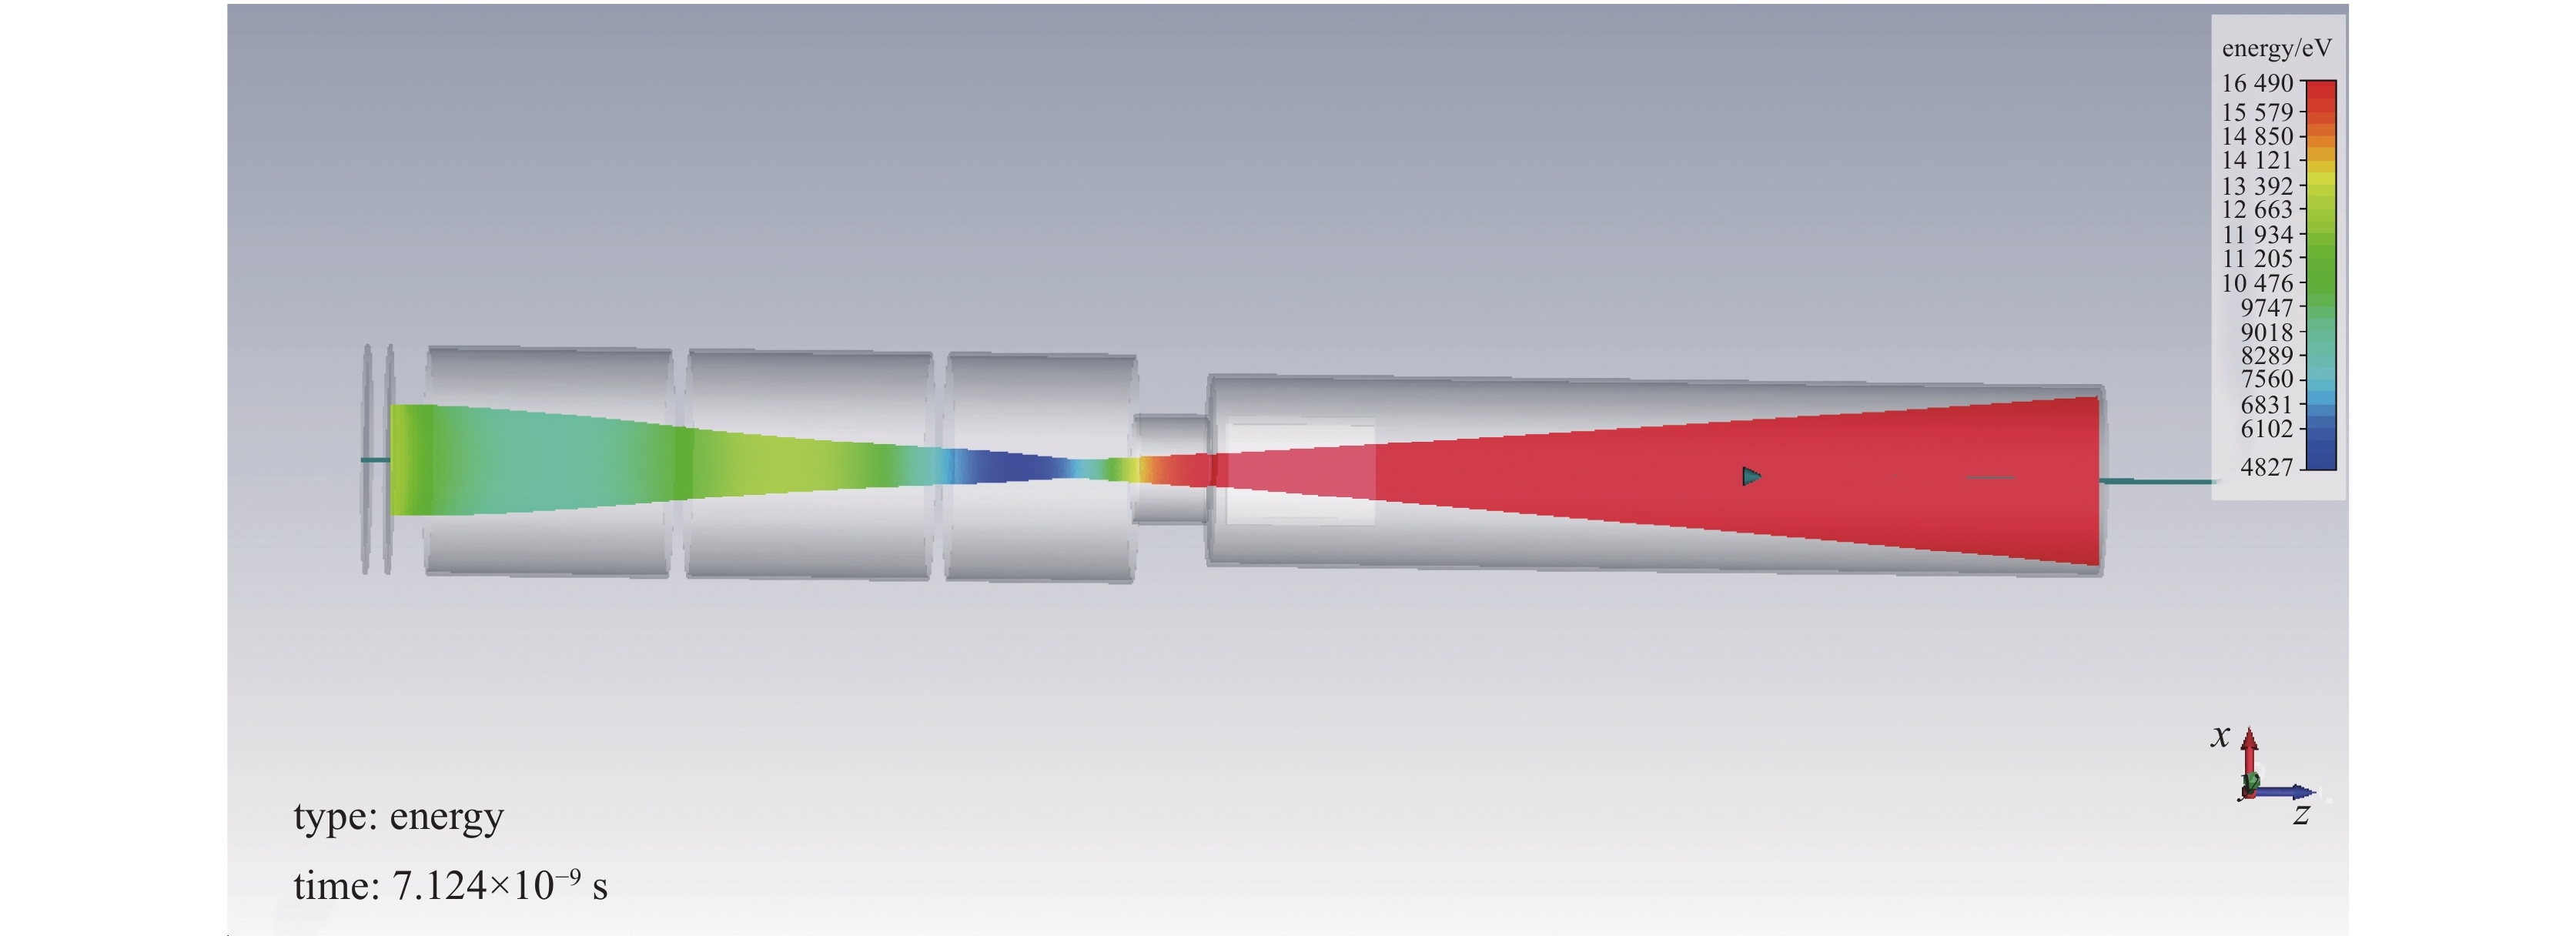 Electron optics simulation map of coaxial electrode double-focus streak tube